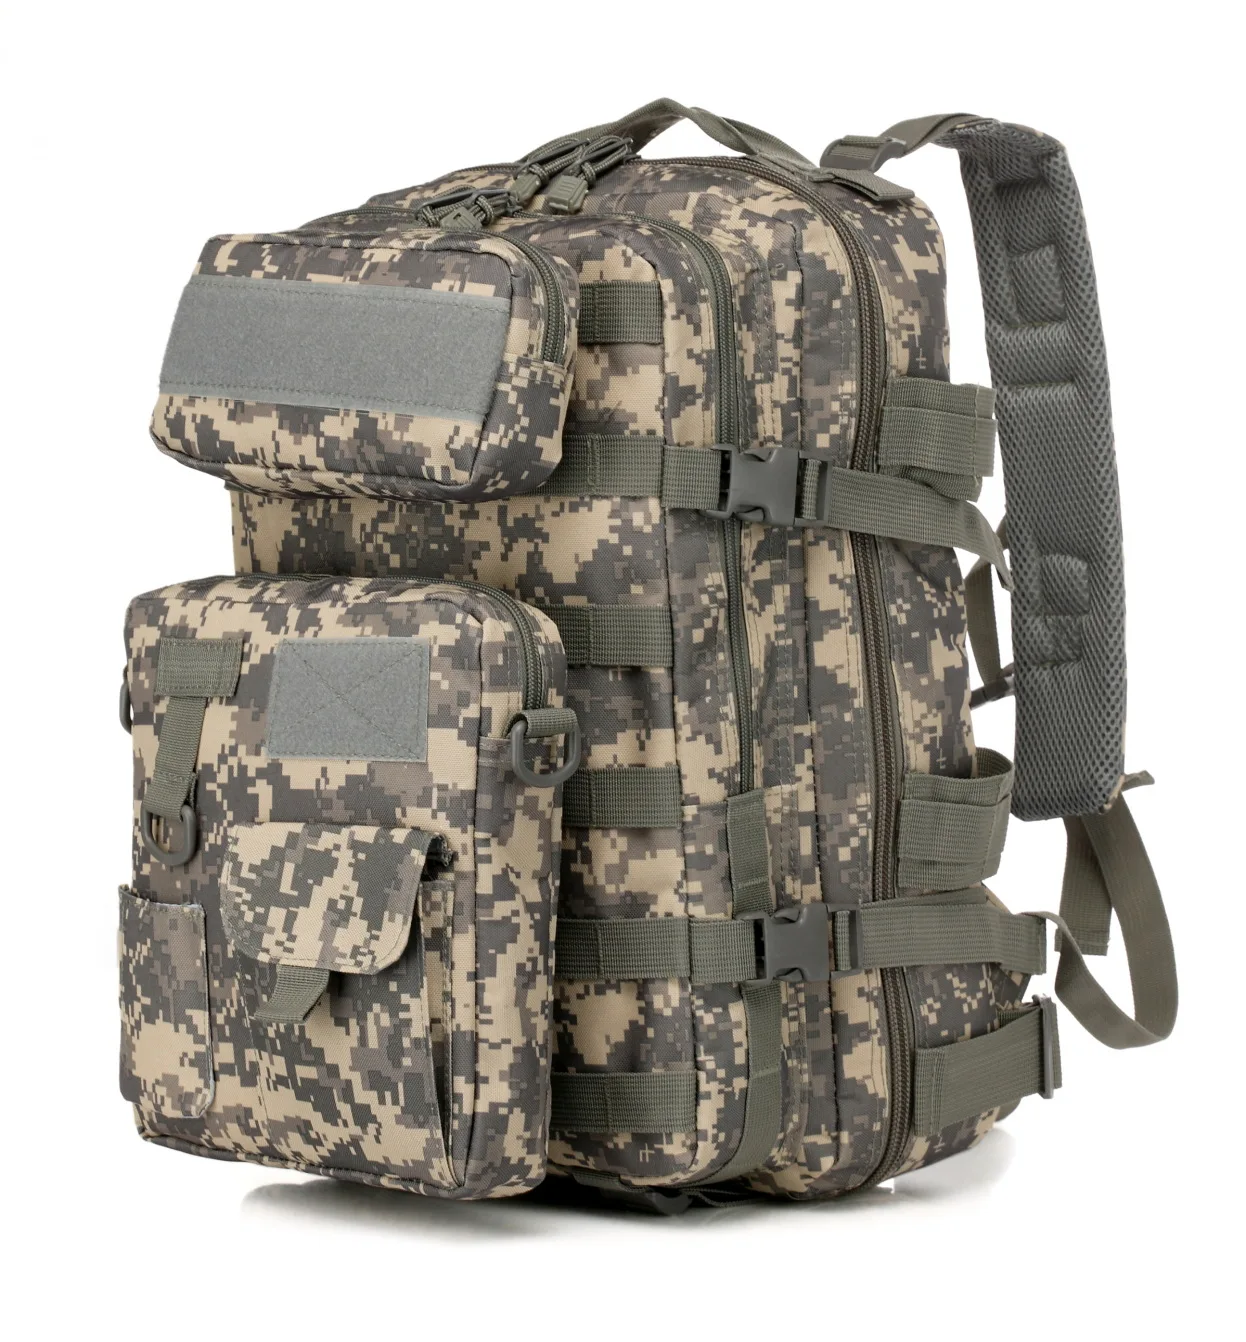 Купи Men's military waterproof wear-resistant outdoor camping hunting tactical backpack hiking mountaineering travel backpack за 1,873 рублей в магазине AliExpress